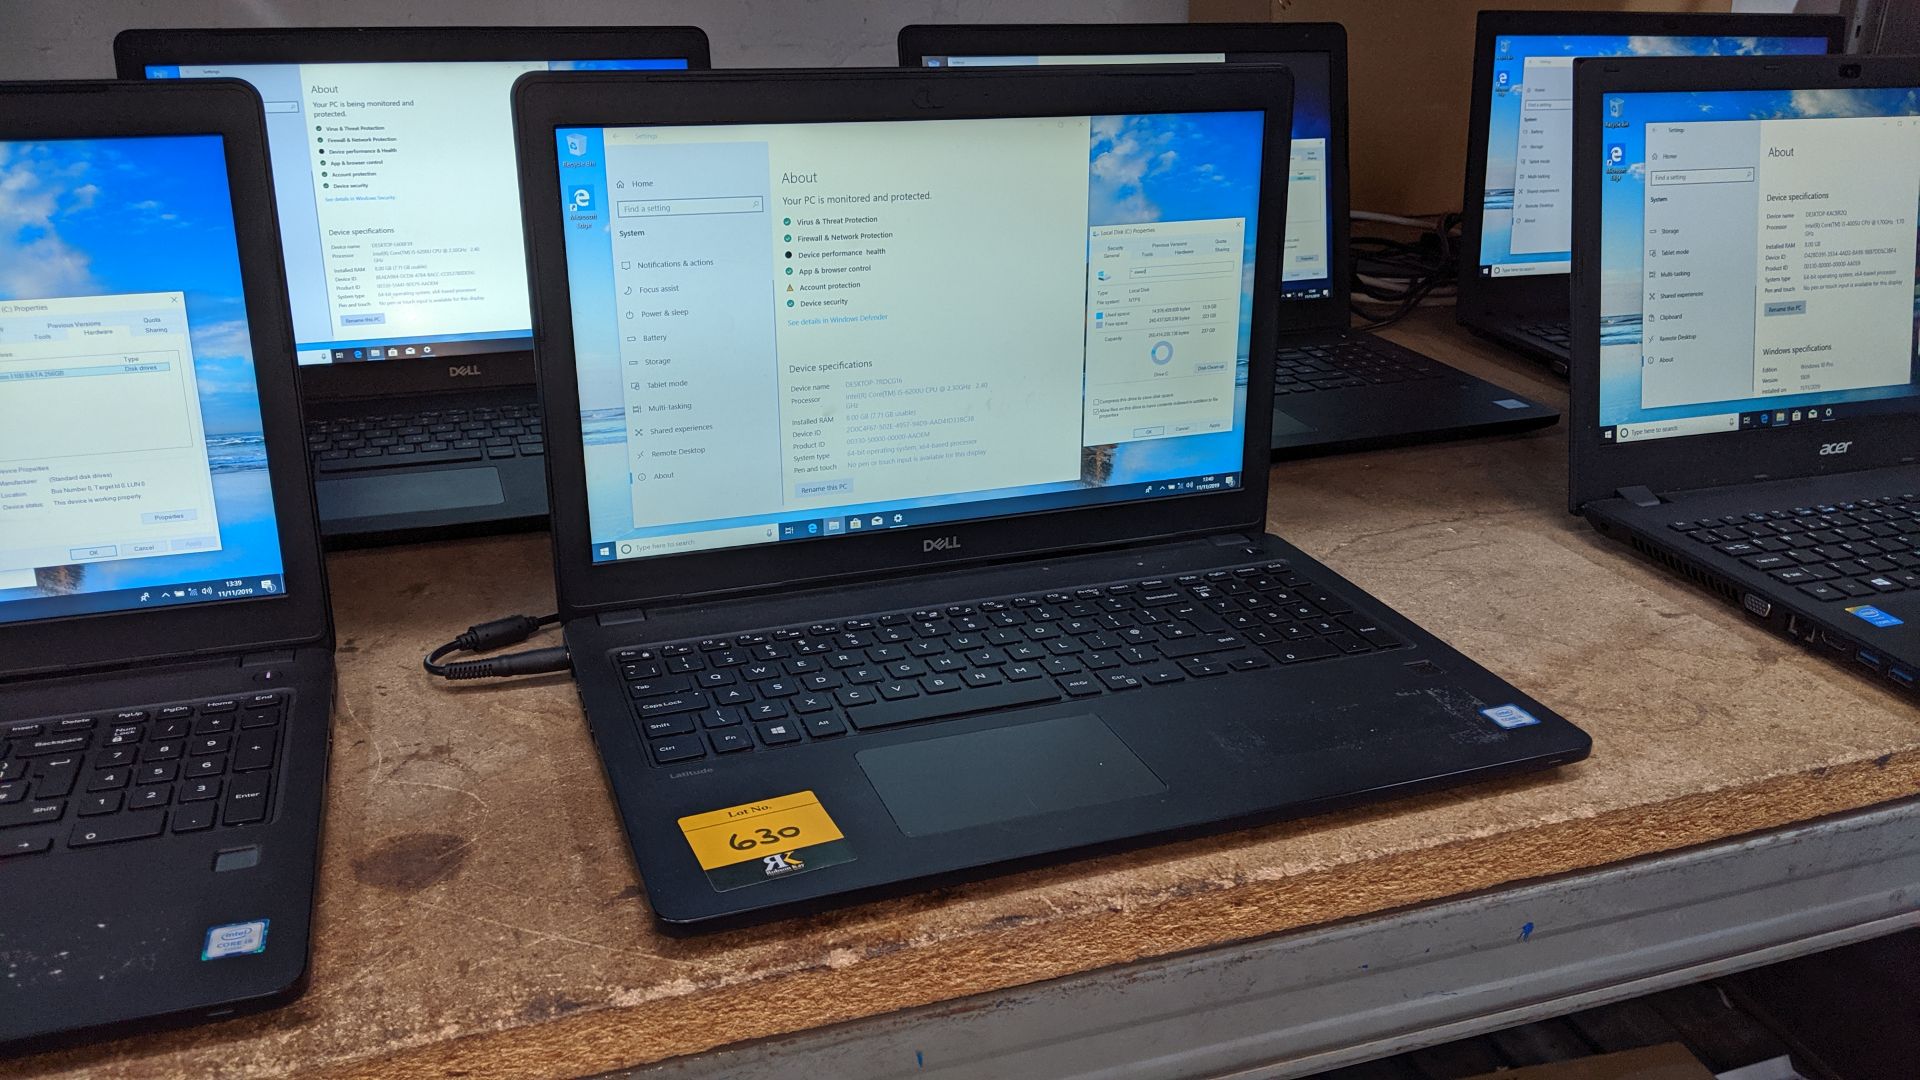 Dell Latitude notebook computer, Intel Core i5-6200u CPU @ 2.3GHz, 8Gb RAM, 256Gb SSD, including